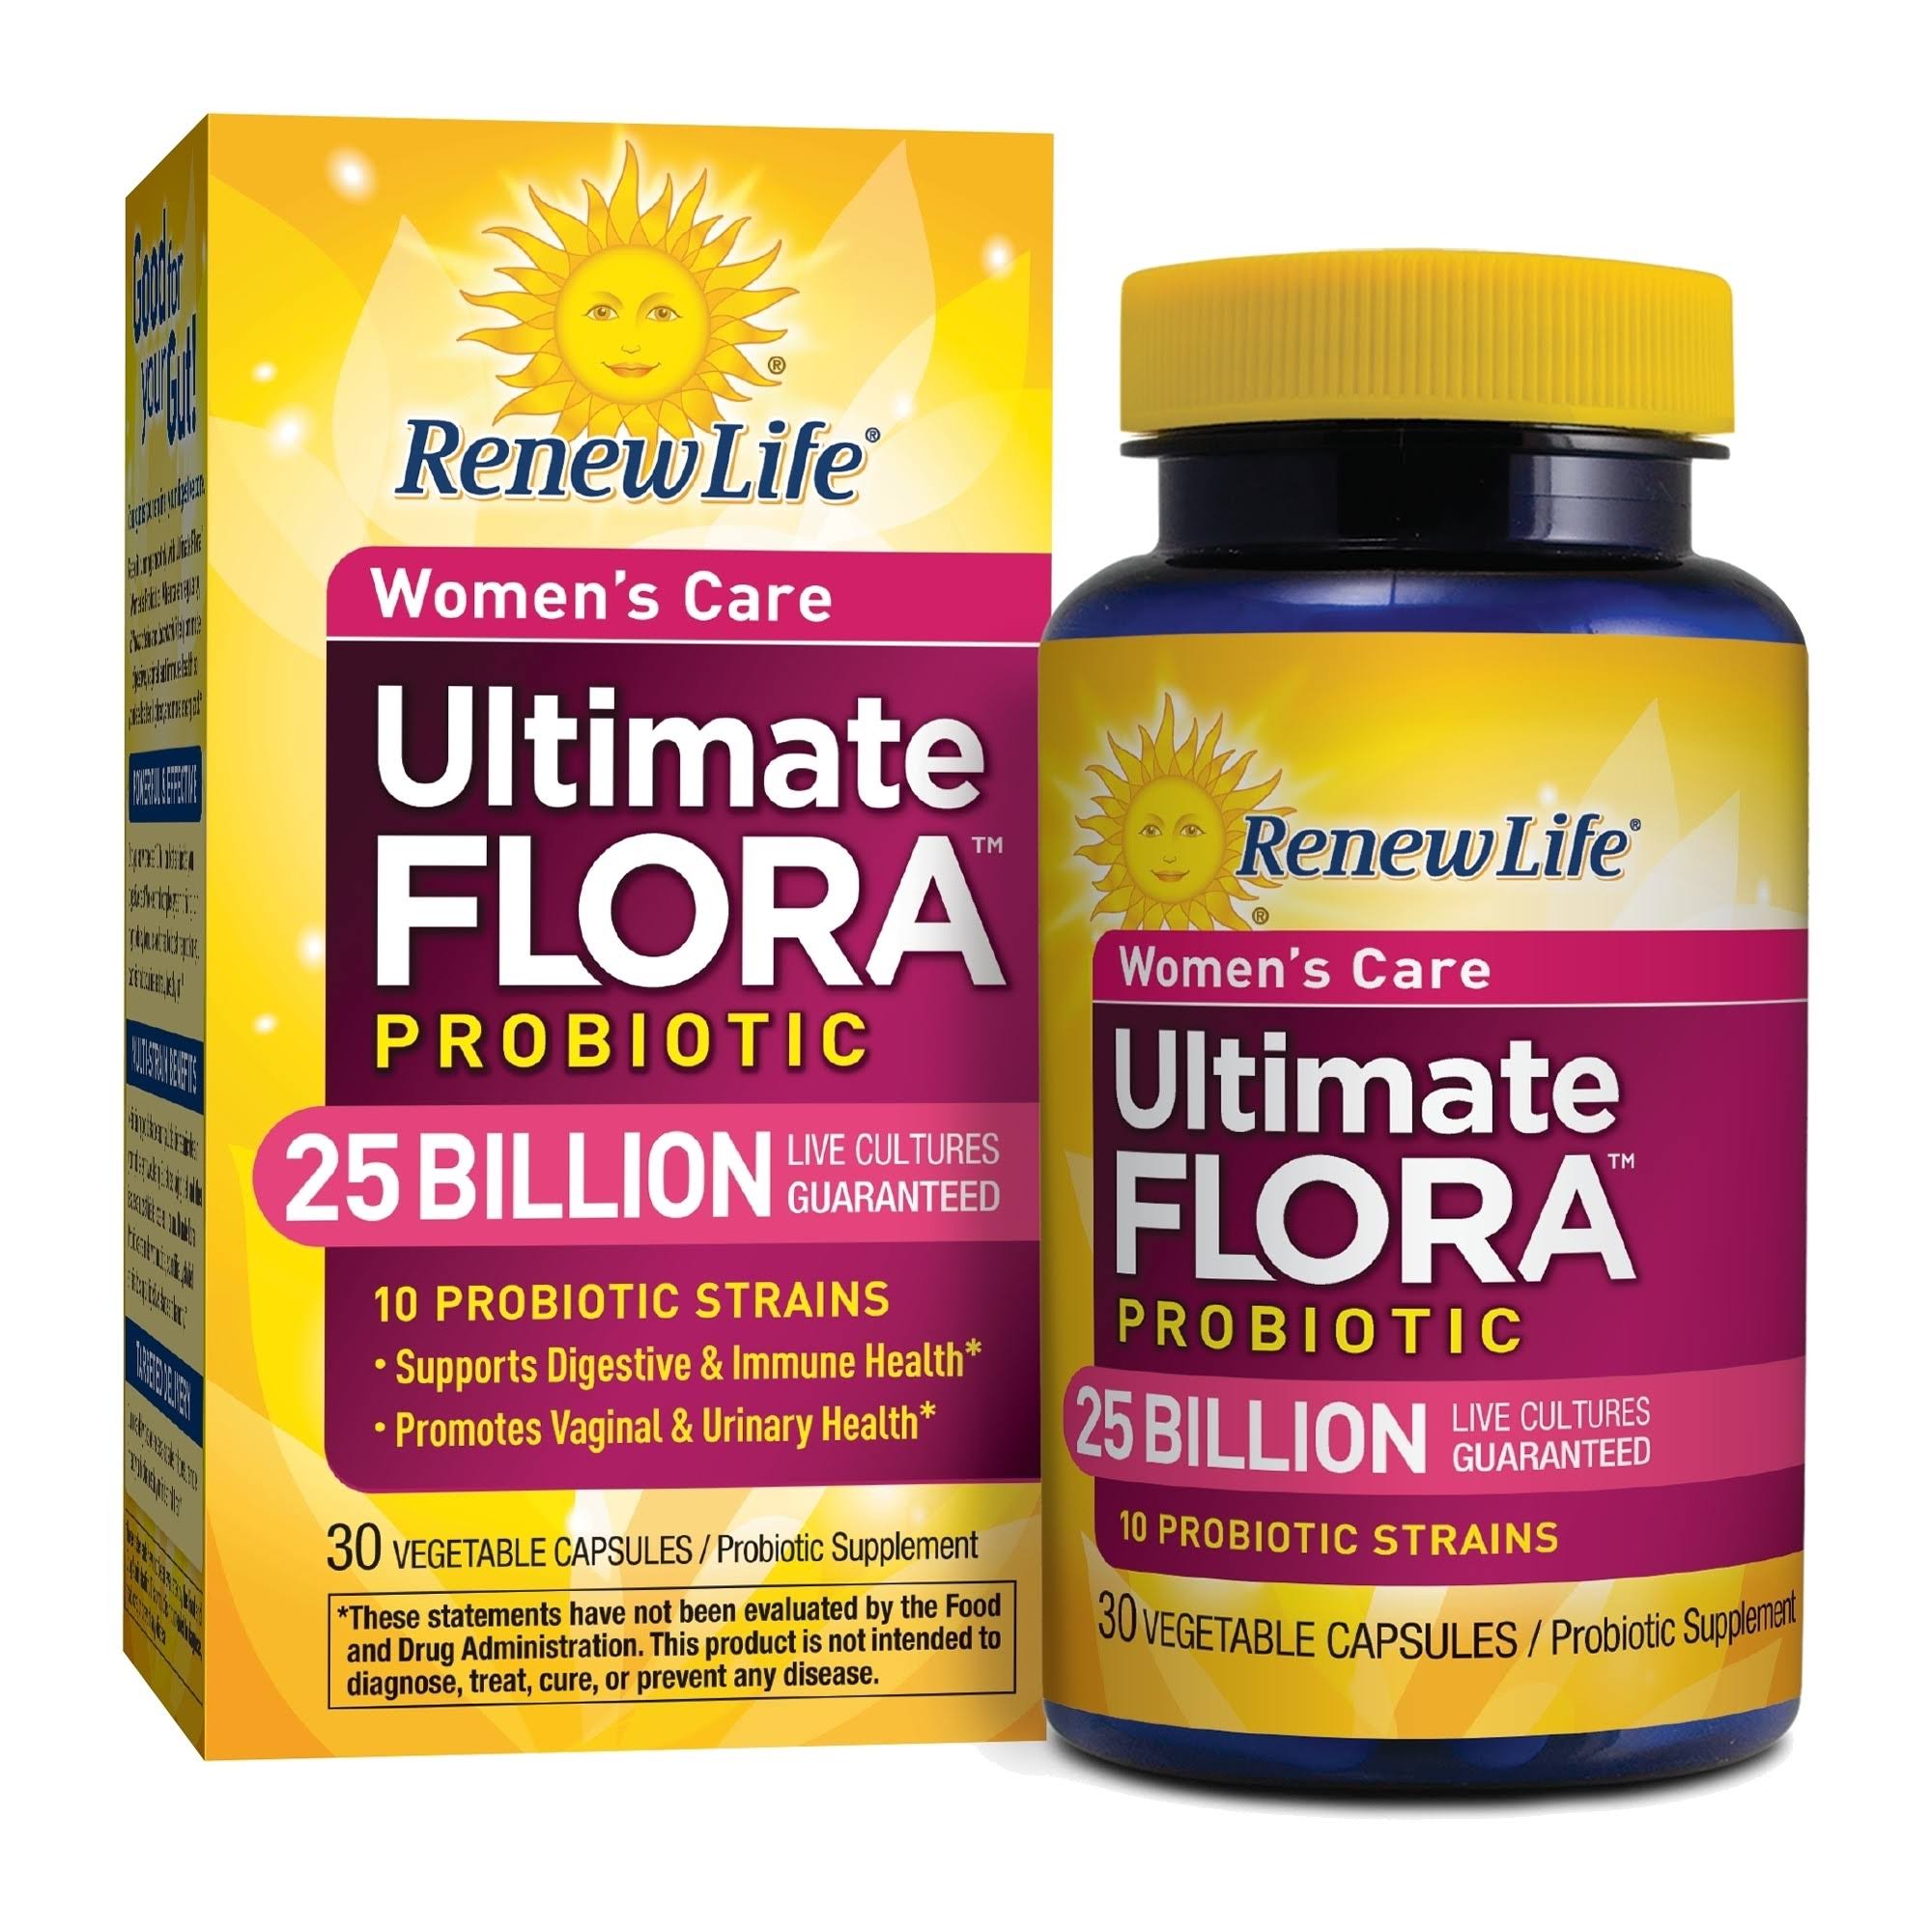 Renew Life Women's Care Ultimate Flora Probiotic Formula - 30 Vegetable Capsules